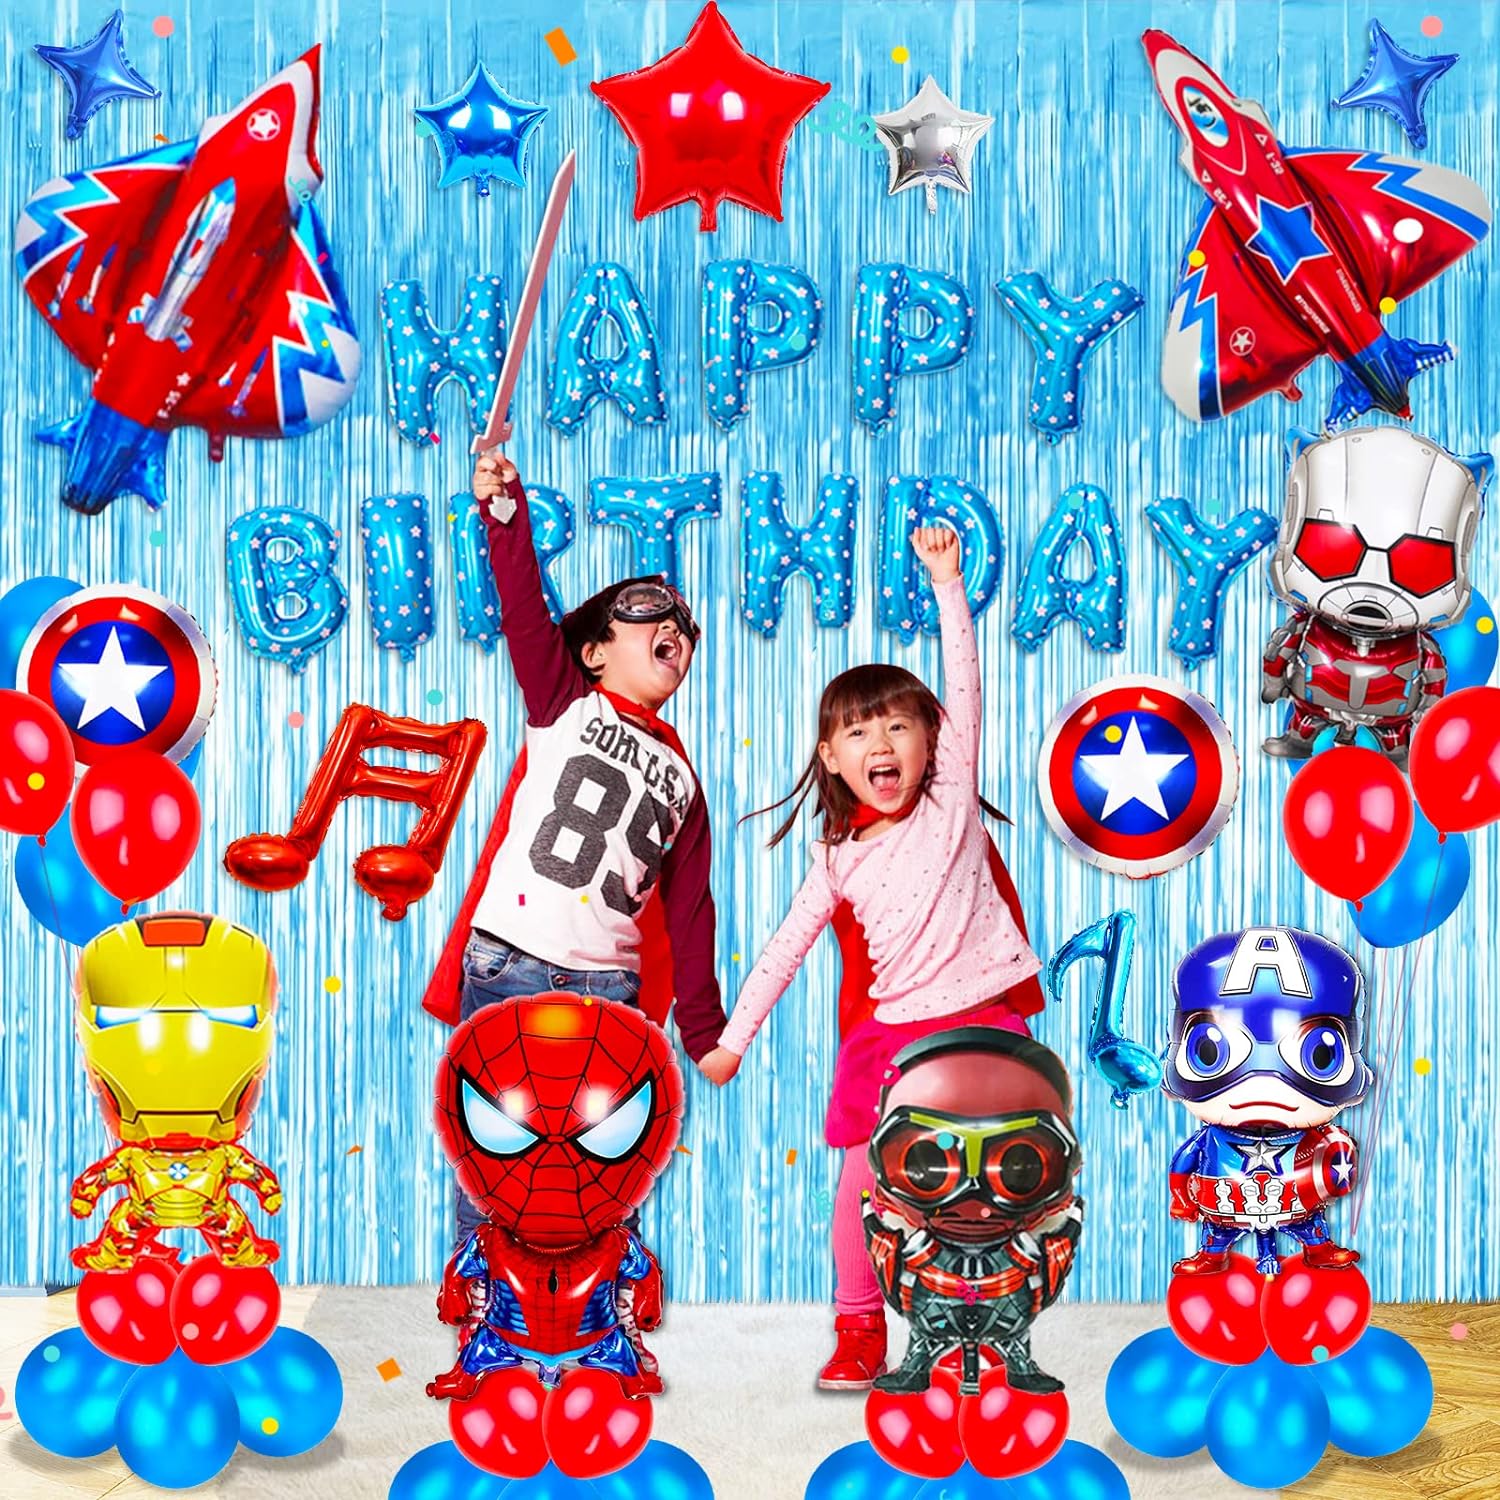 Superhero Party Decorations Package - Preppy Kids (Grand Bazaar)